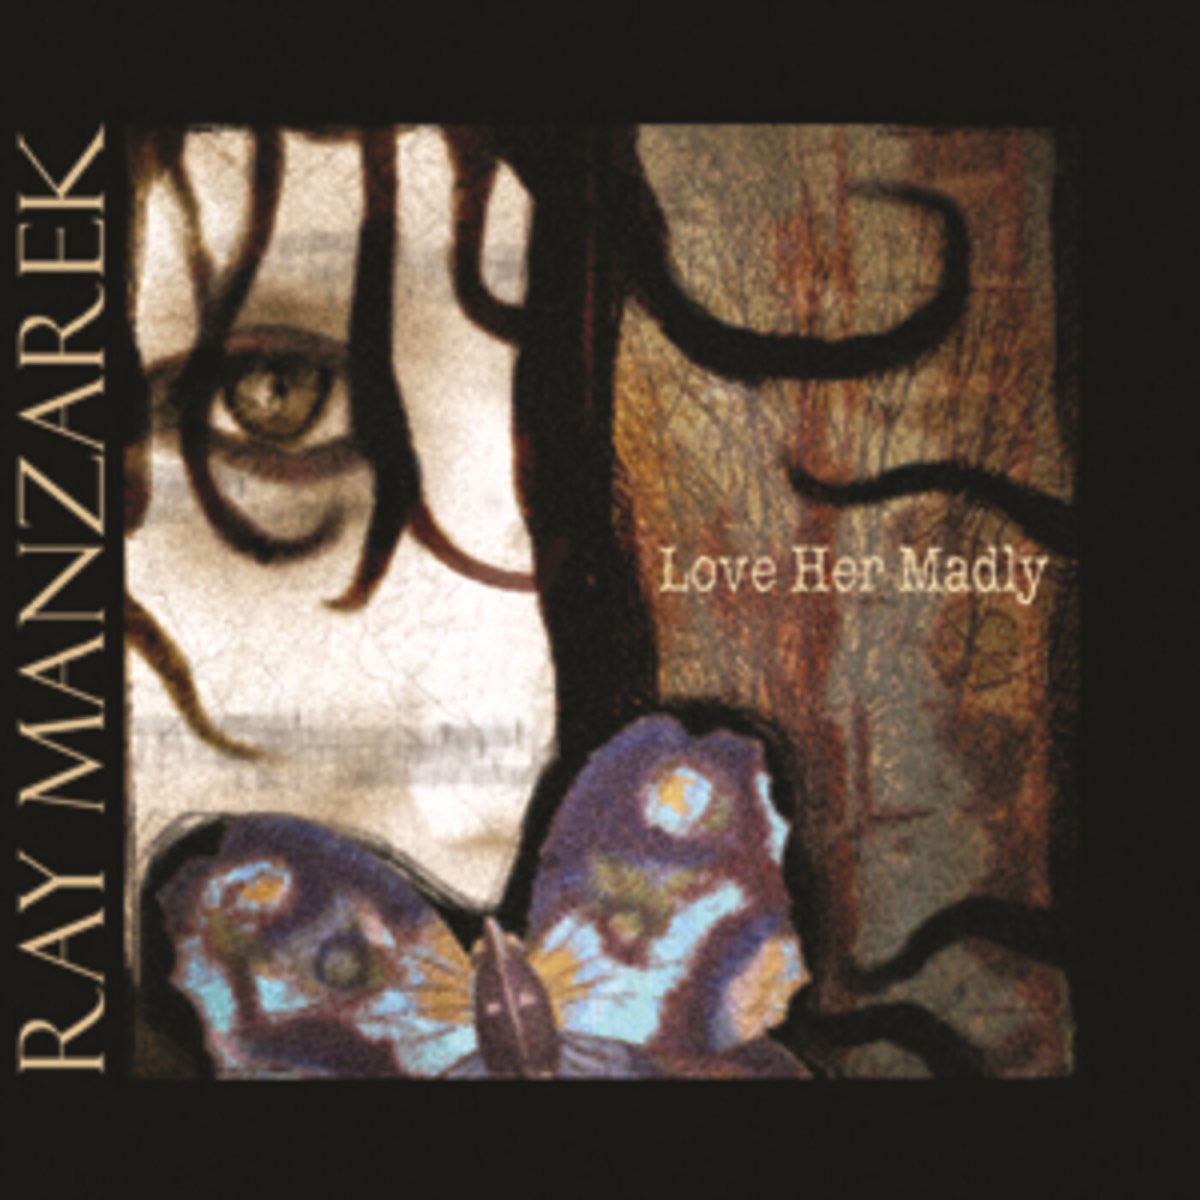 Love Her Madly (Original Soundtrack) - Album di Ray Manzarek - Apple Music